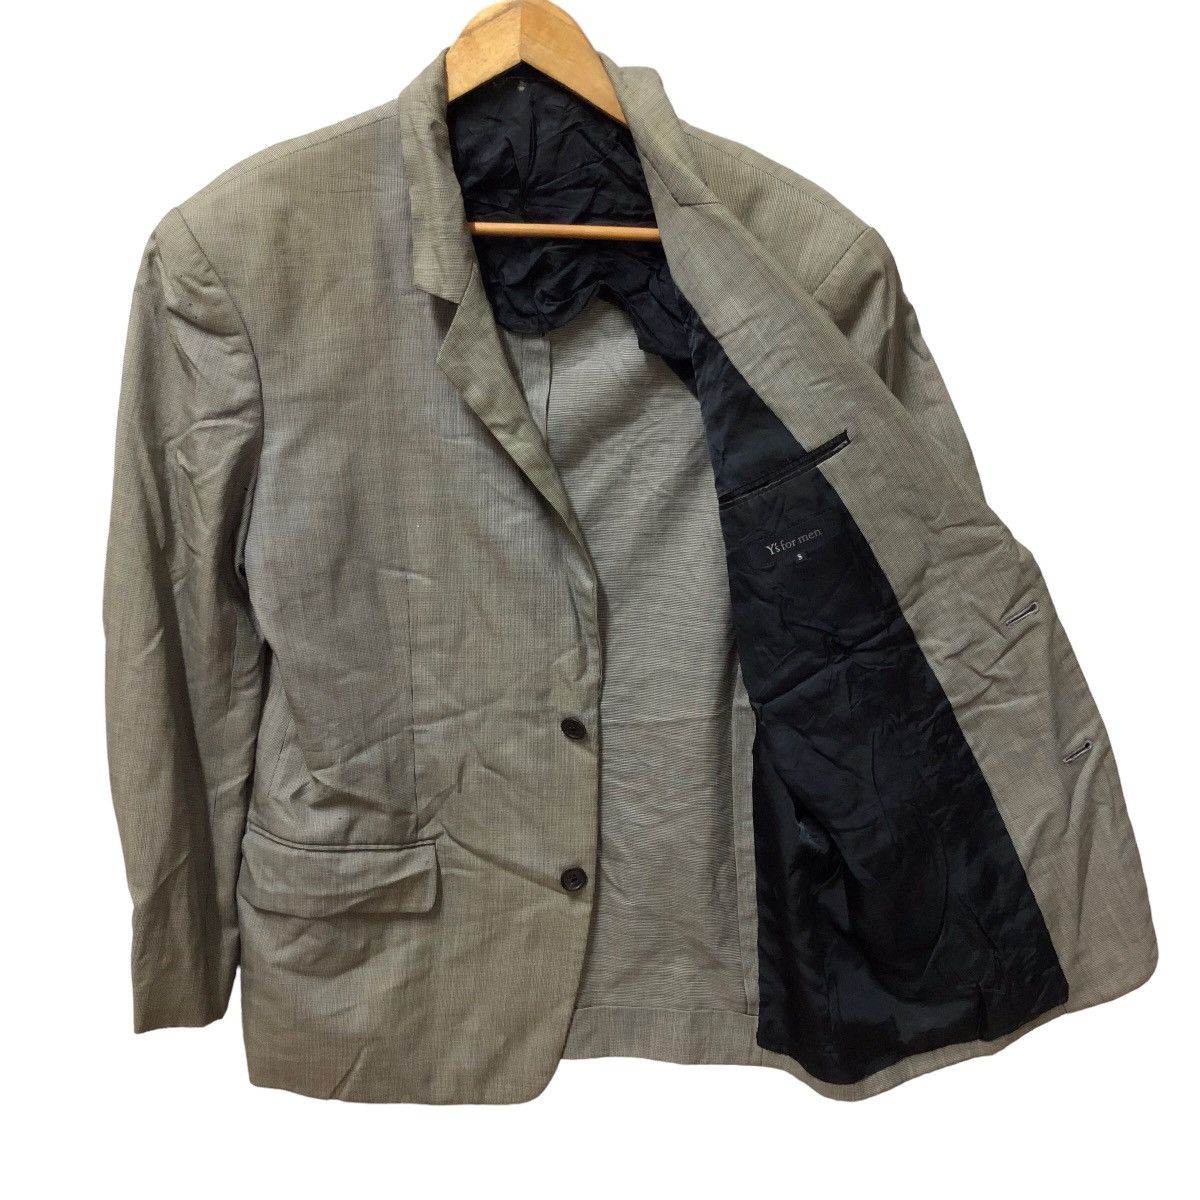 Vintage y’s for men distrested wool suit jacket - 2